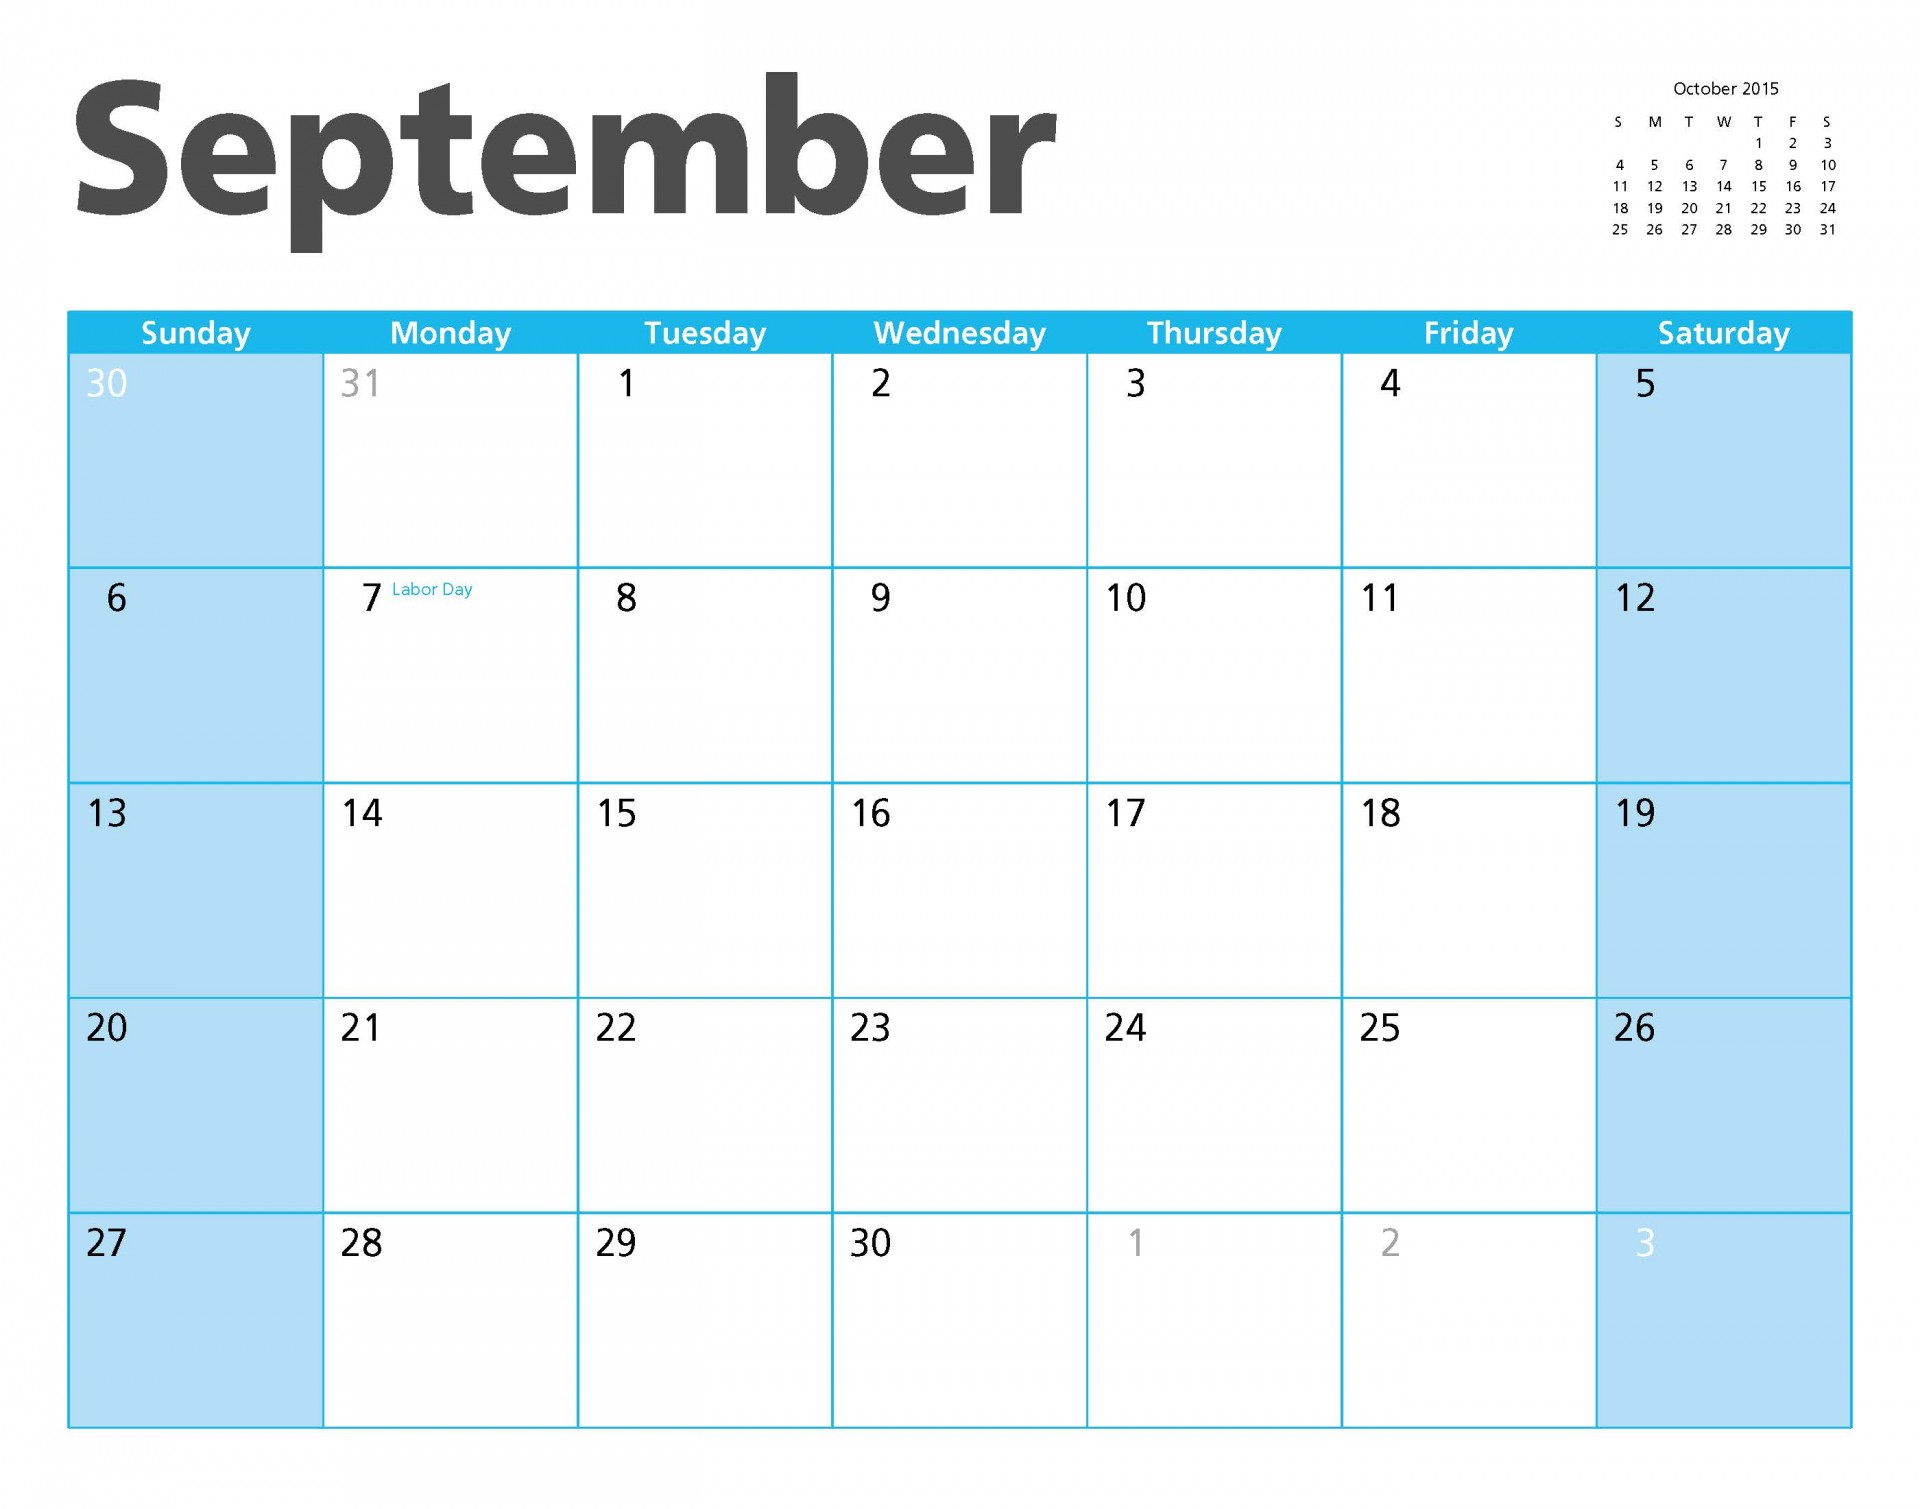 September 2015 kalender sidan